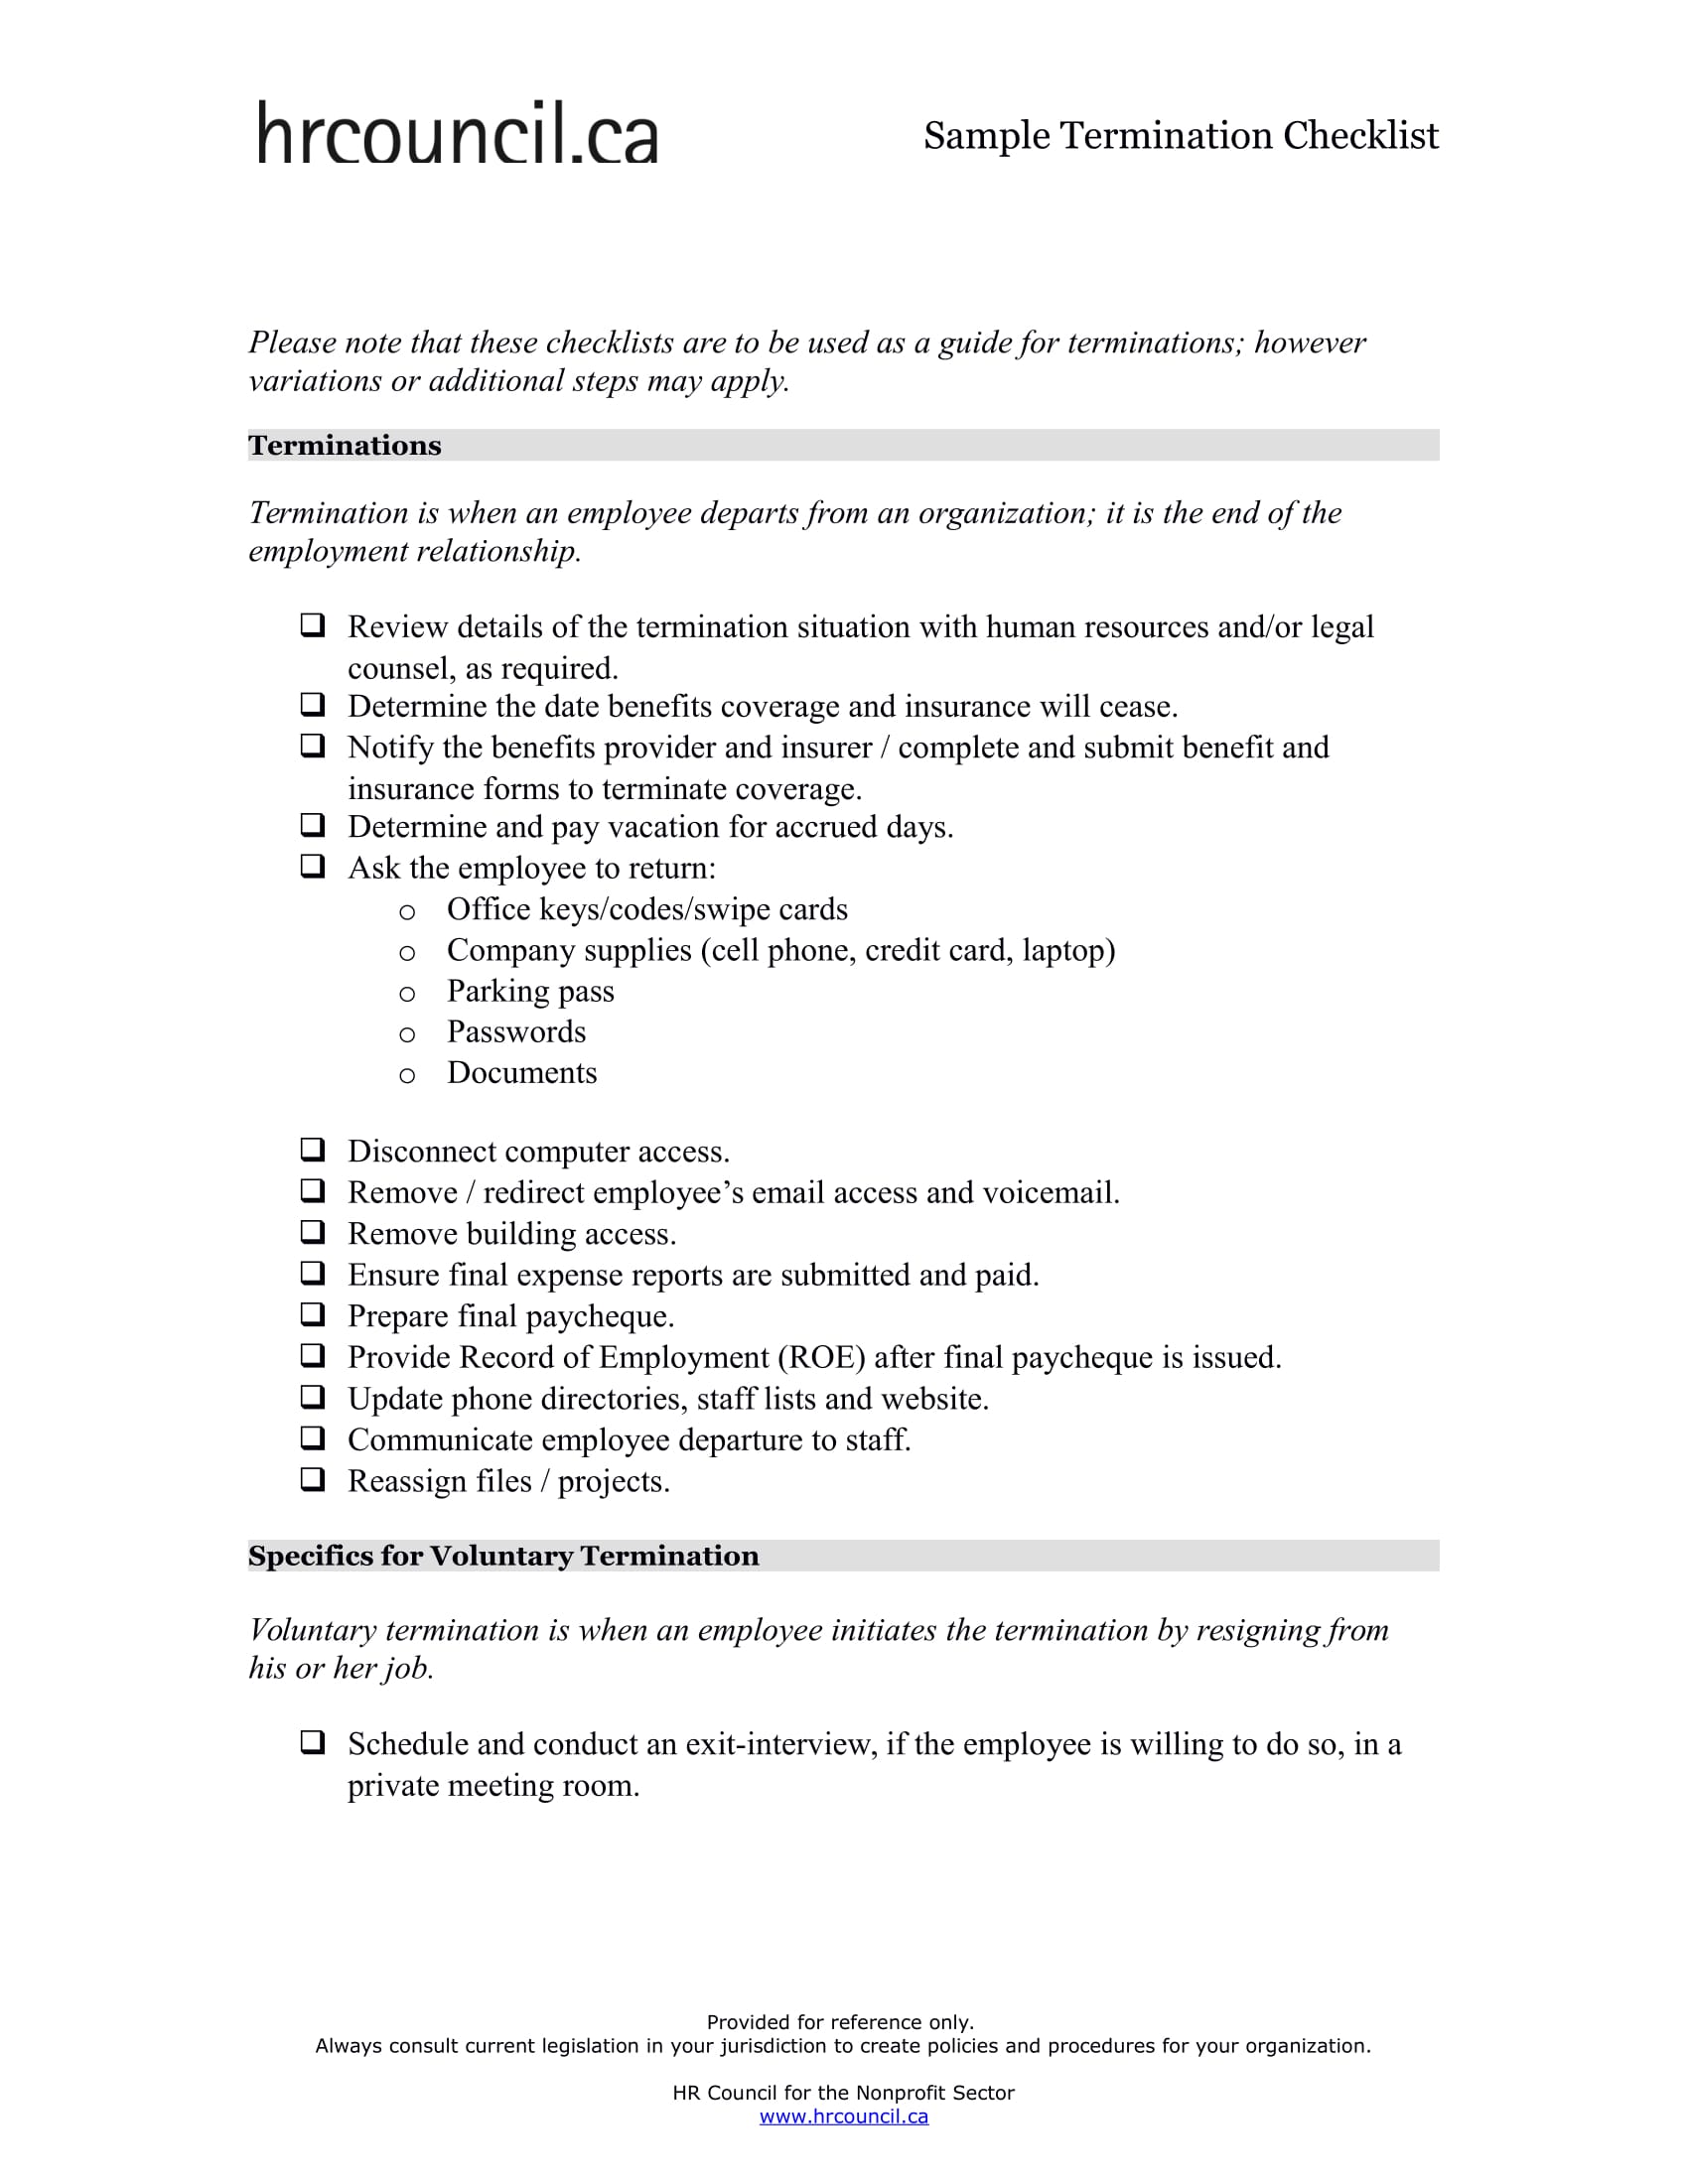 sample employee termination checklist 1